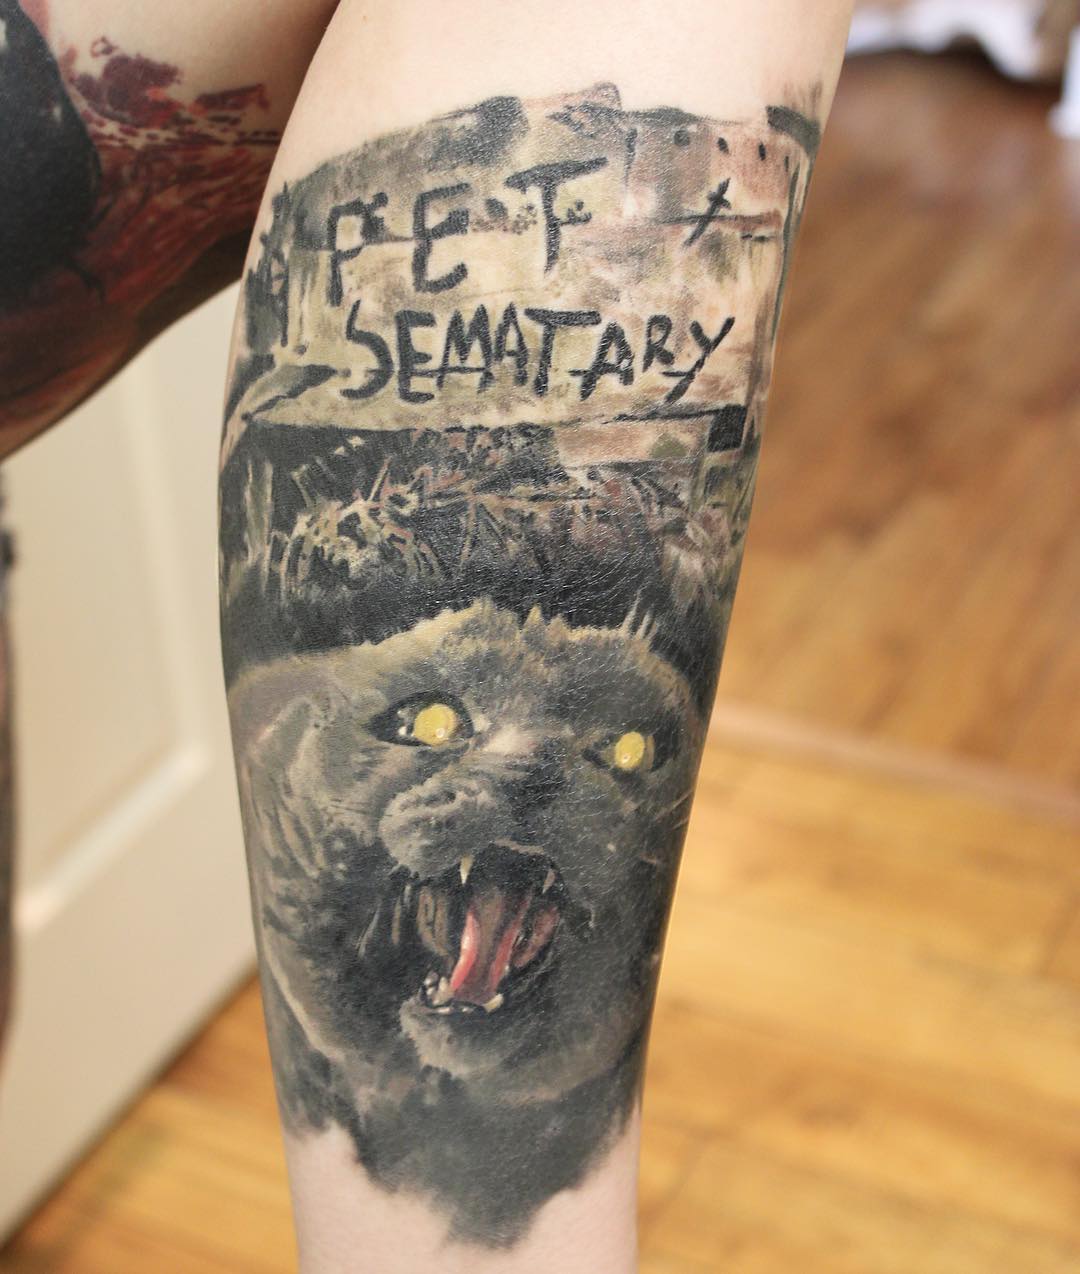 Pet Sematary tattoo by requiemtattoo